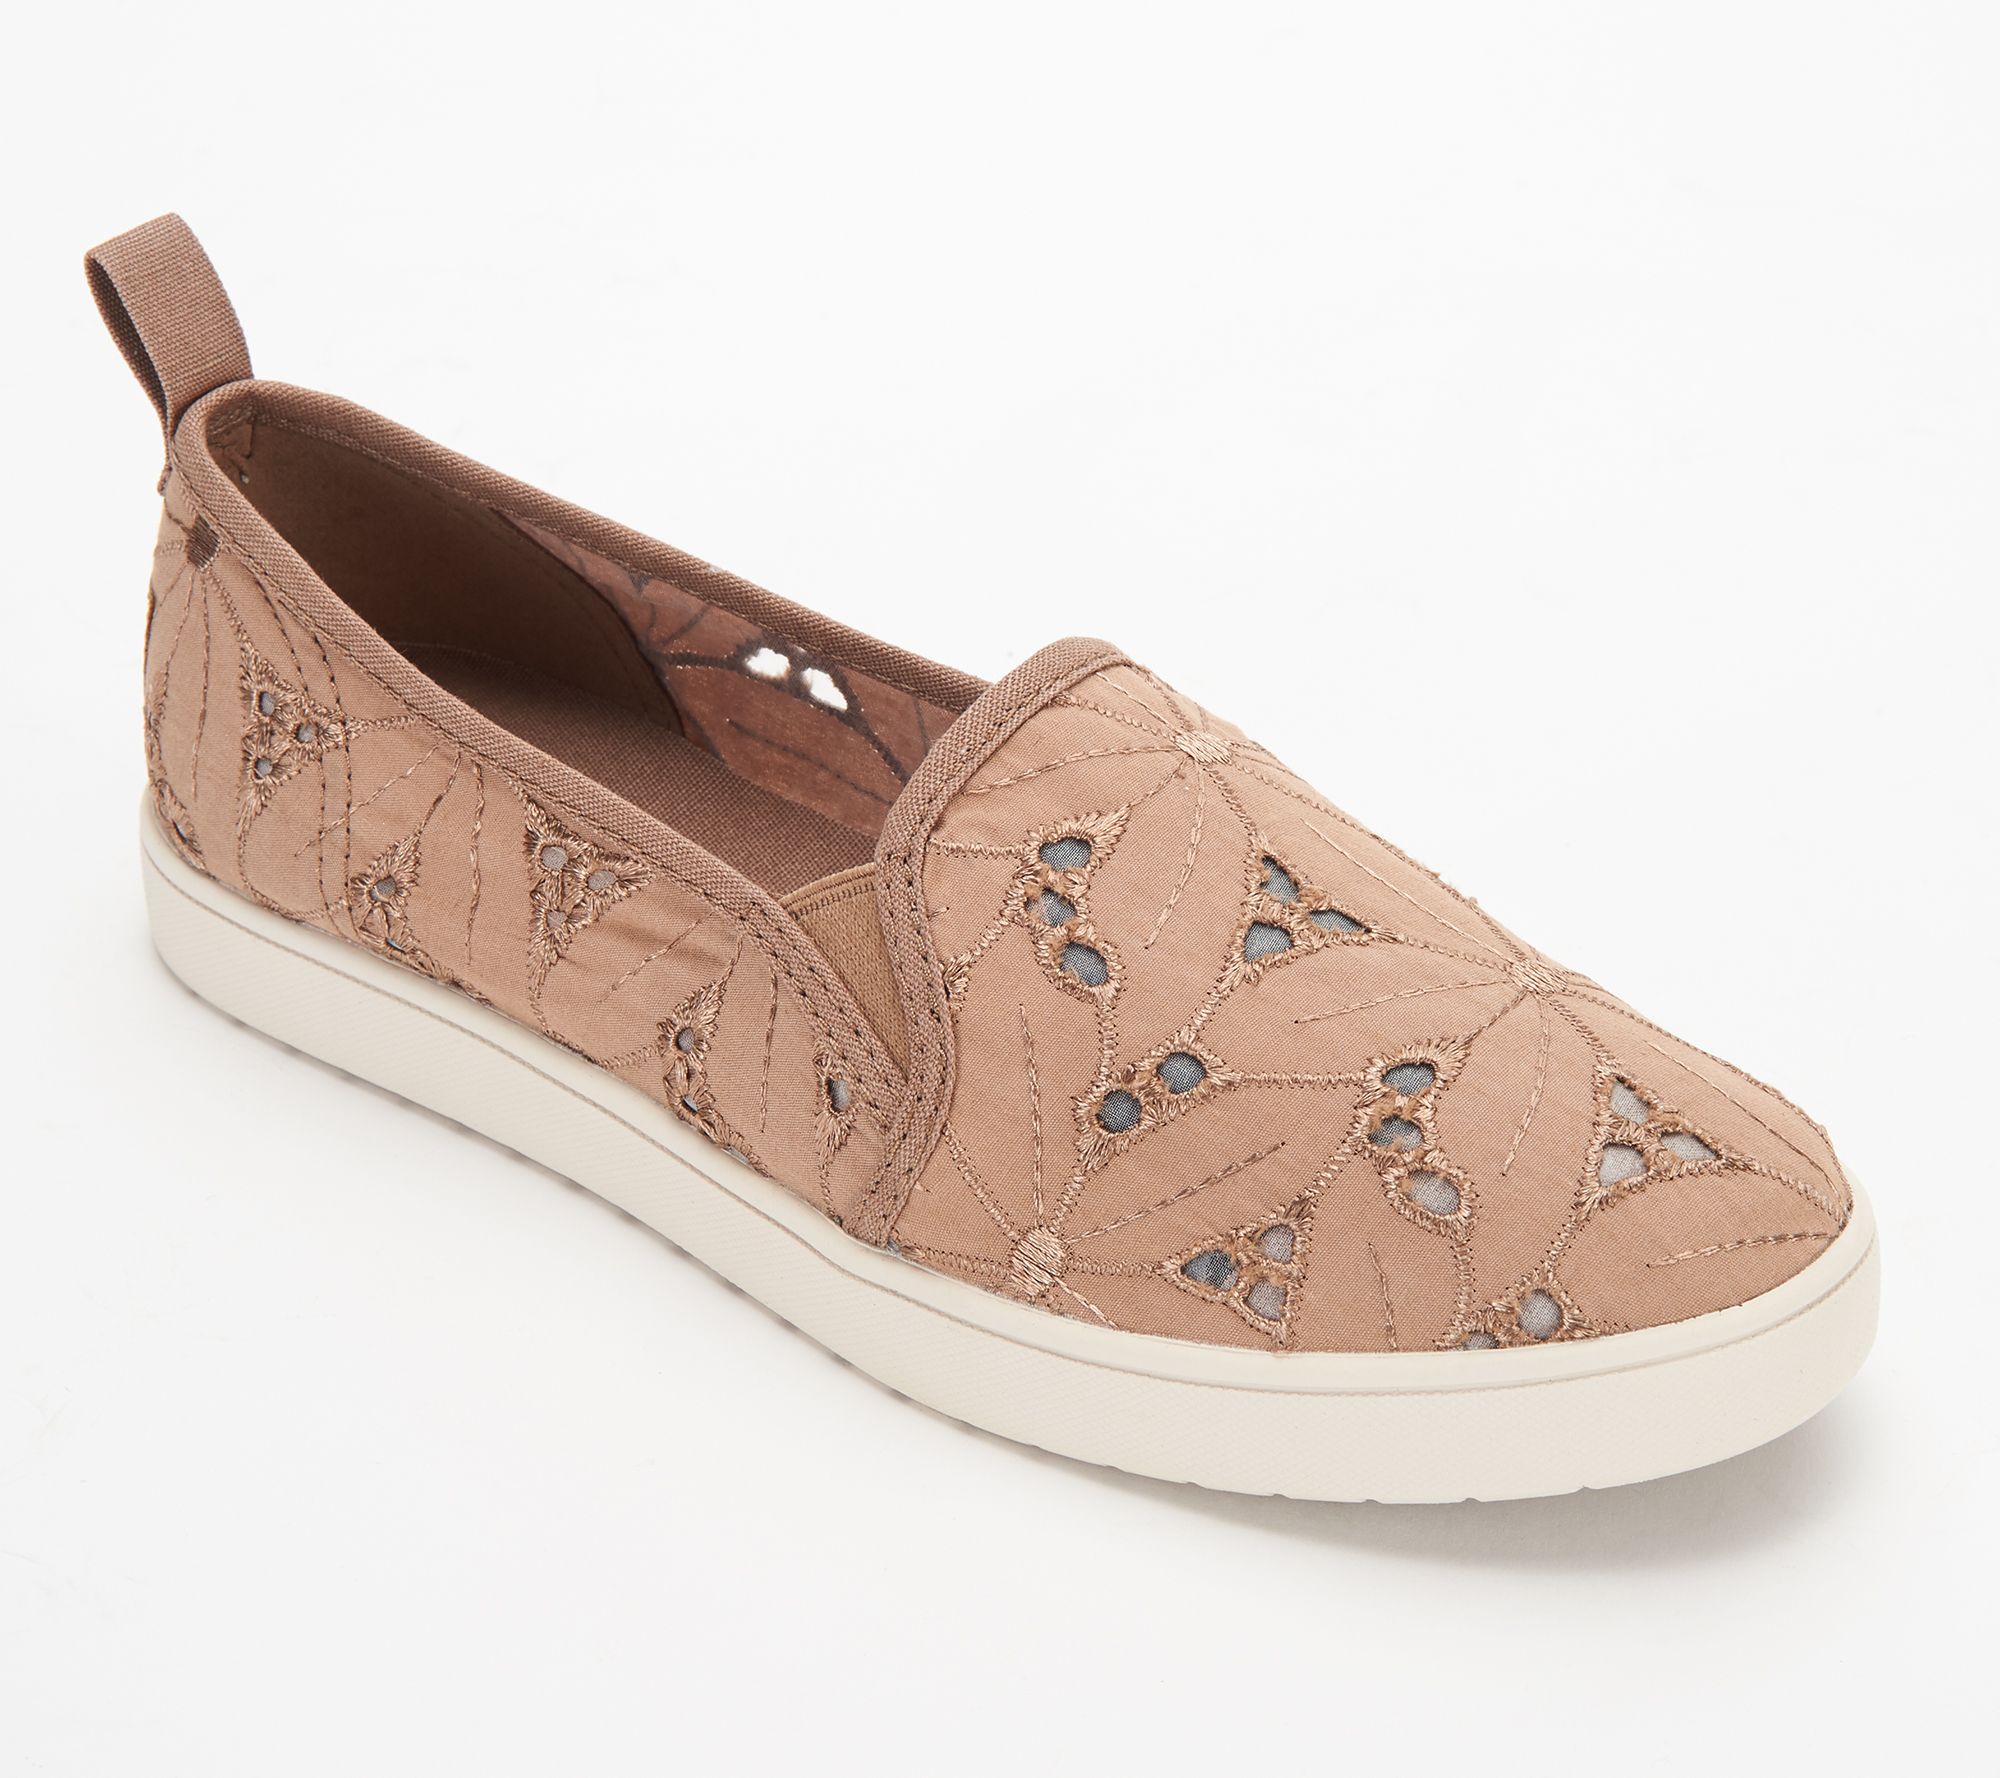 Koolaburra Floral Slip-On Shoes - Amiah 